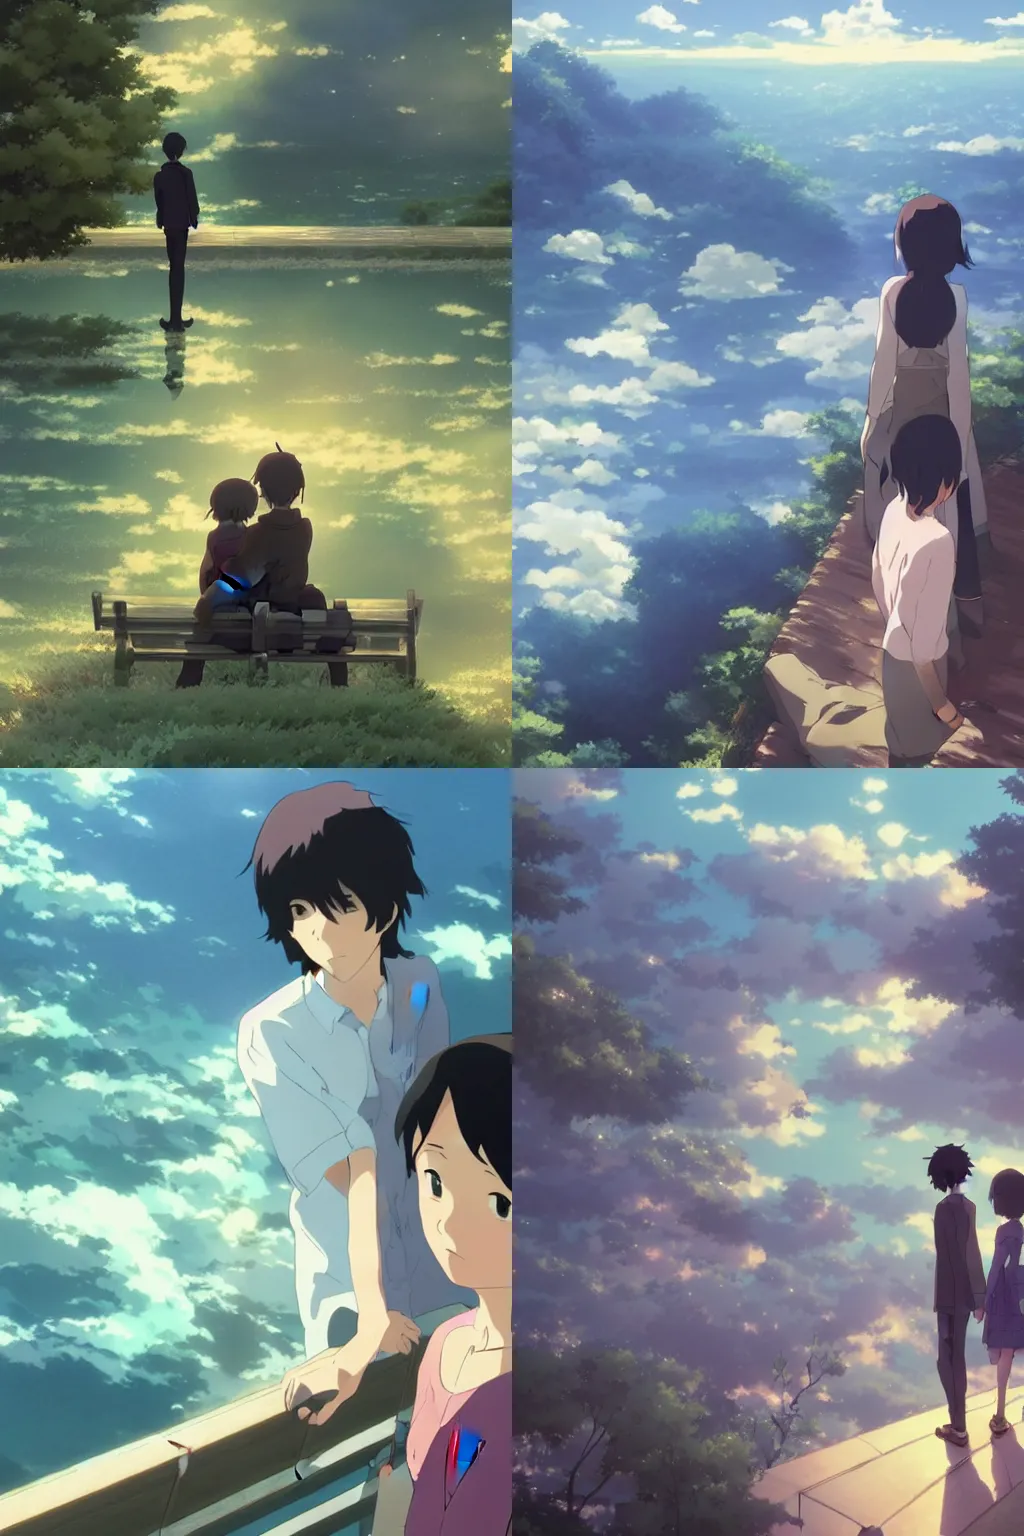 Prompt: romance movie by makoto shinkai, visually stunning